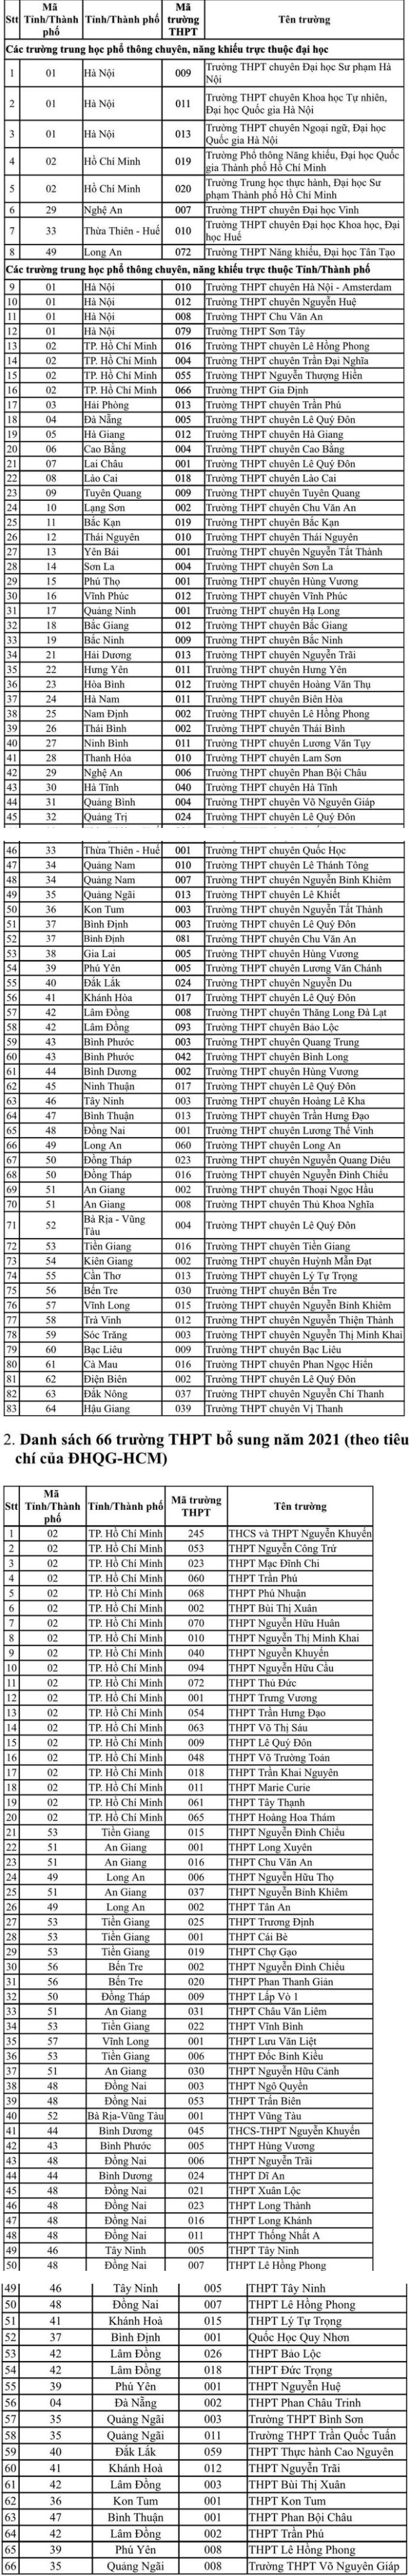 149 truong THPT duoc uu tien xet tuyen vao DH Quoc gia TPHCM 2021